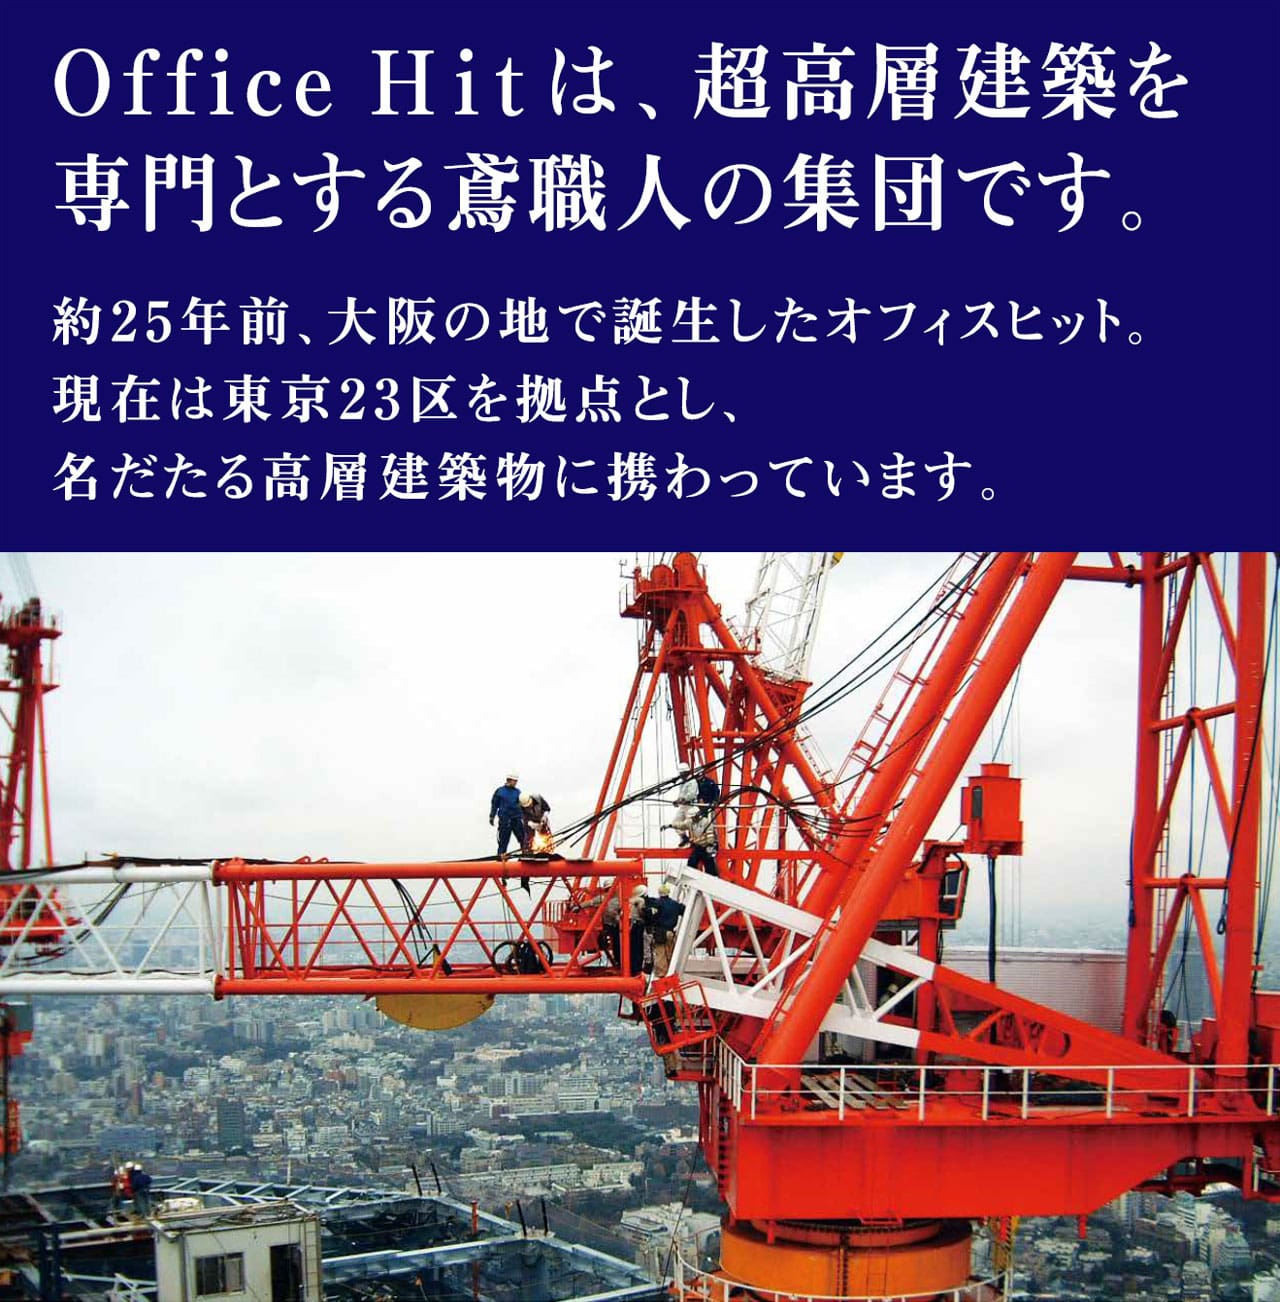 Office Hitは、超高層建築を専門とする鳶職人の集団です。約25年前、大阪で誕生したオフィスヒット。現在は東京23区を拠点とし、名だたる高層建築物に携わっています。